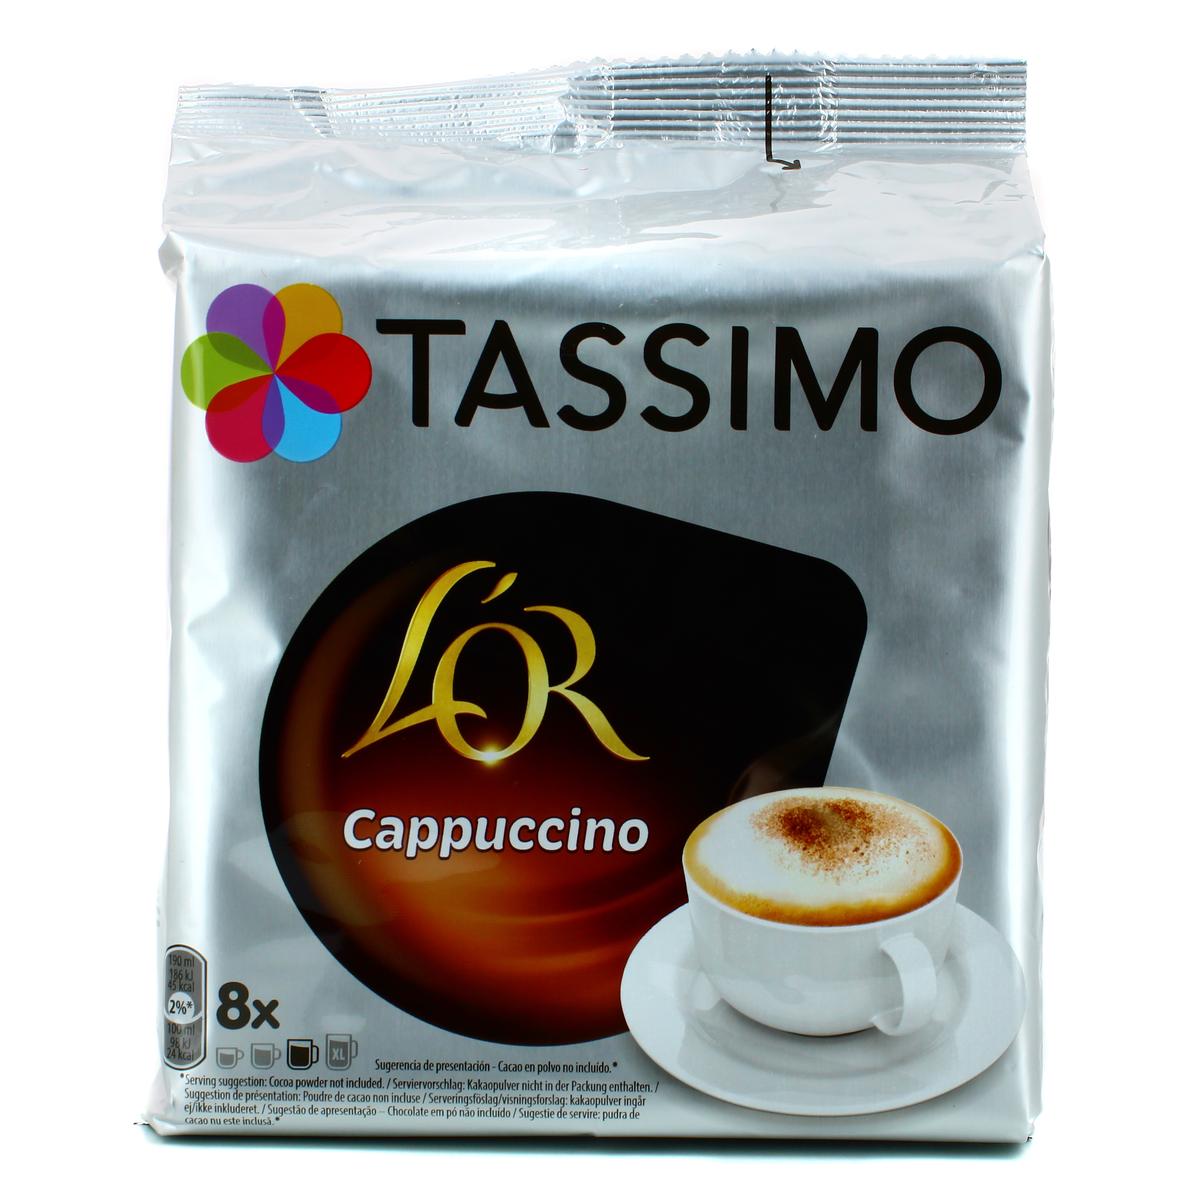 TASSIMO Café dosettes Maxwell House Cappuccino goût choco - Lot de